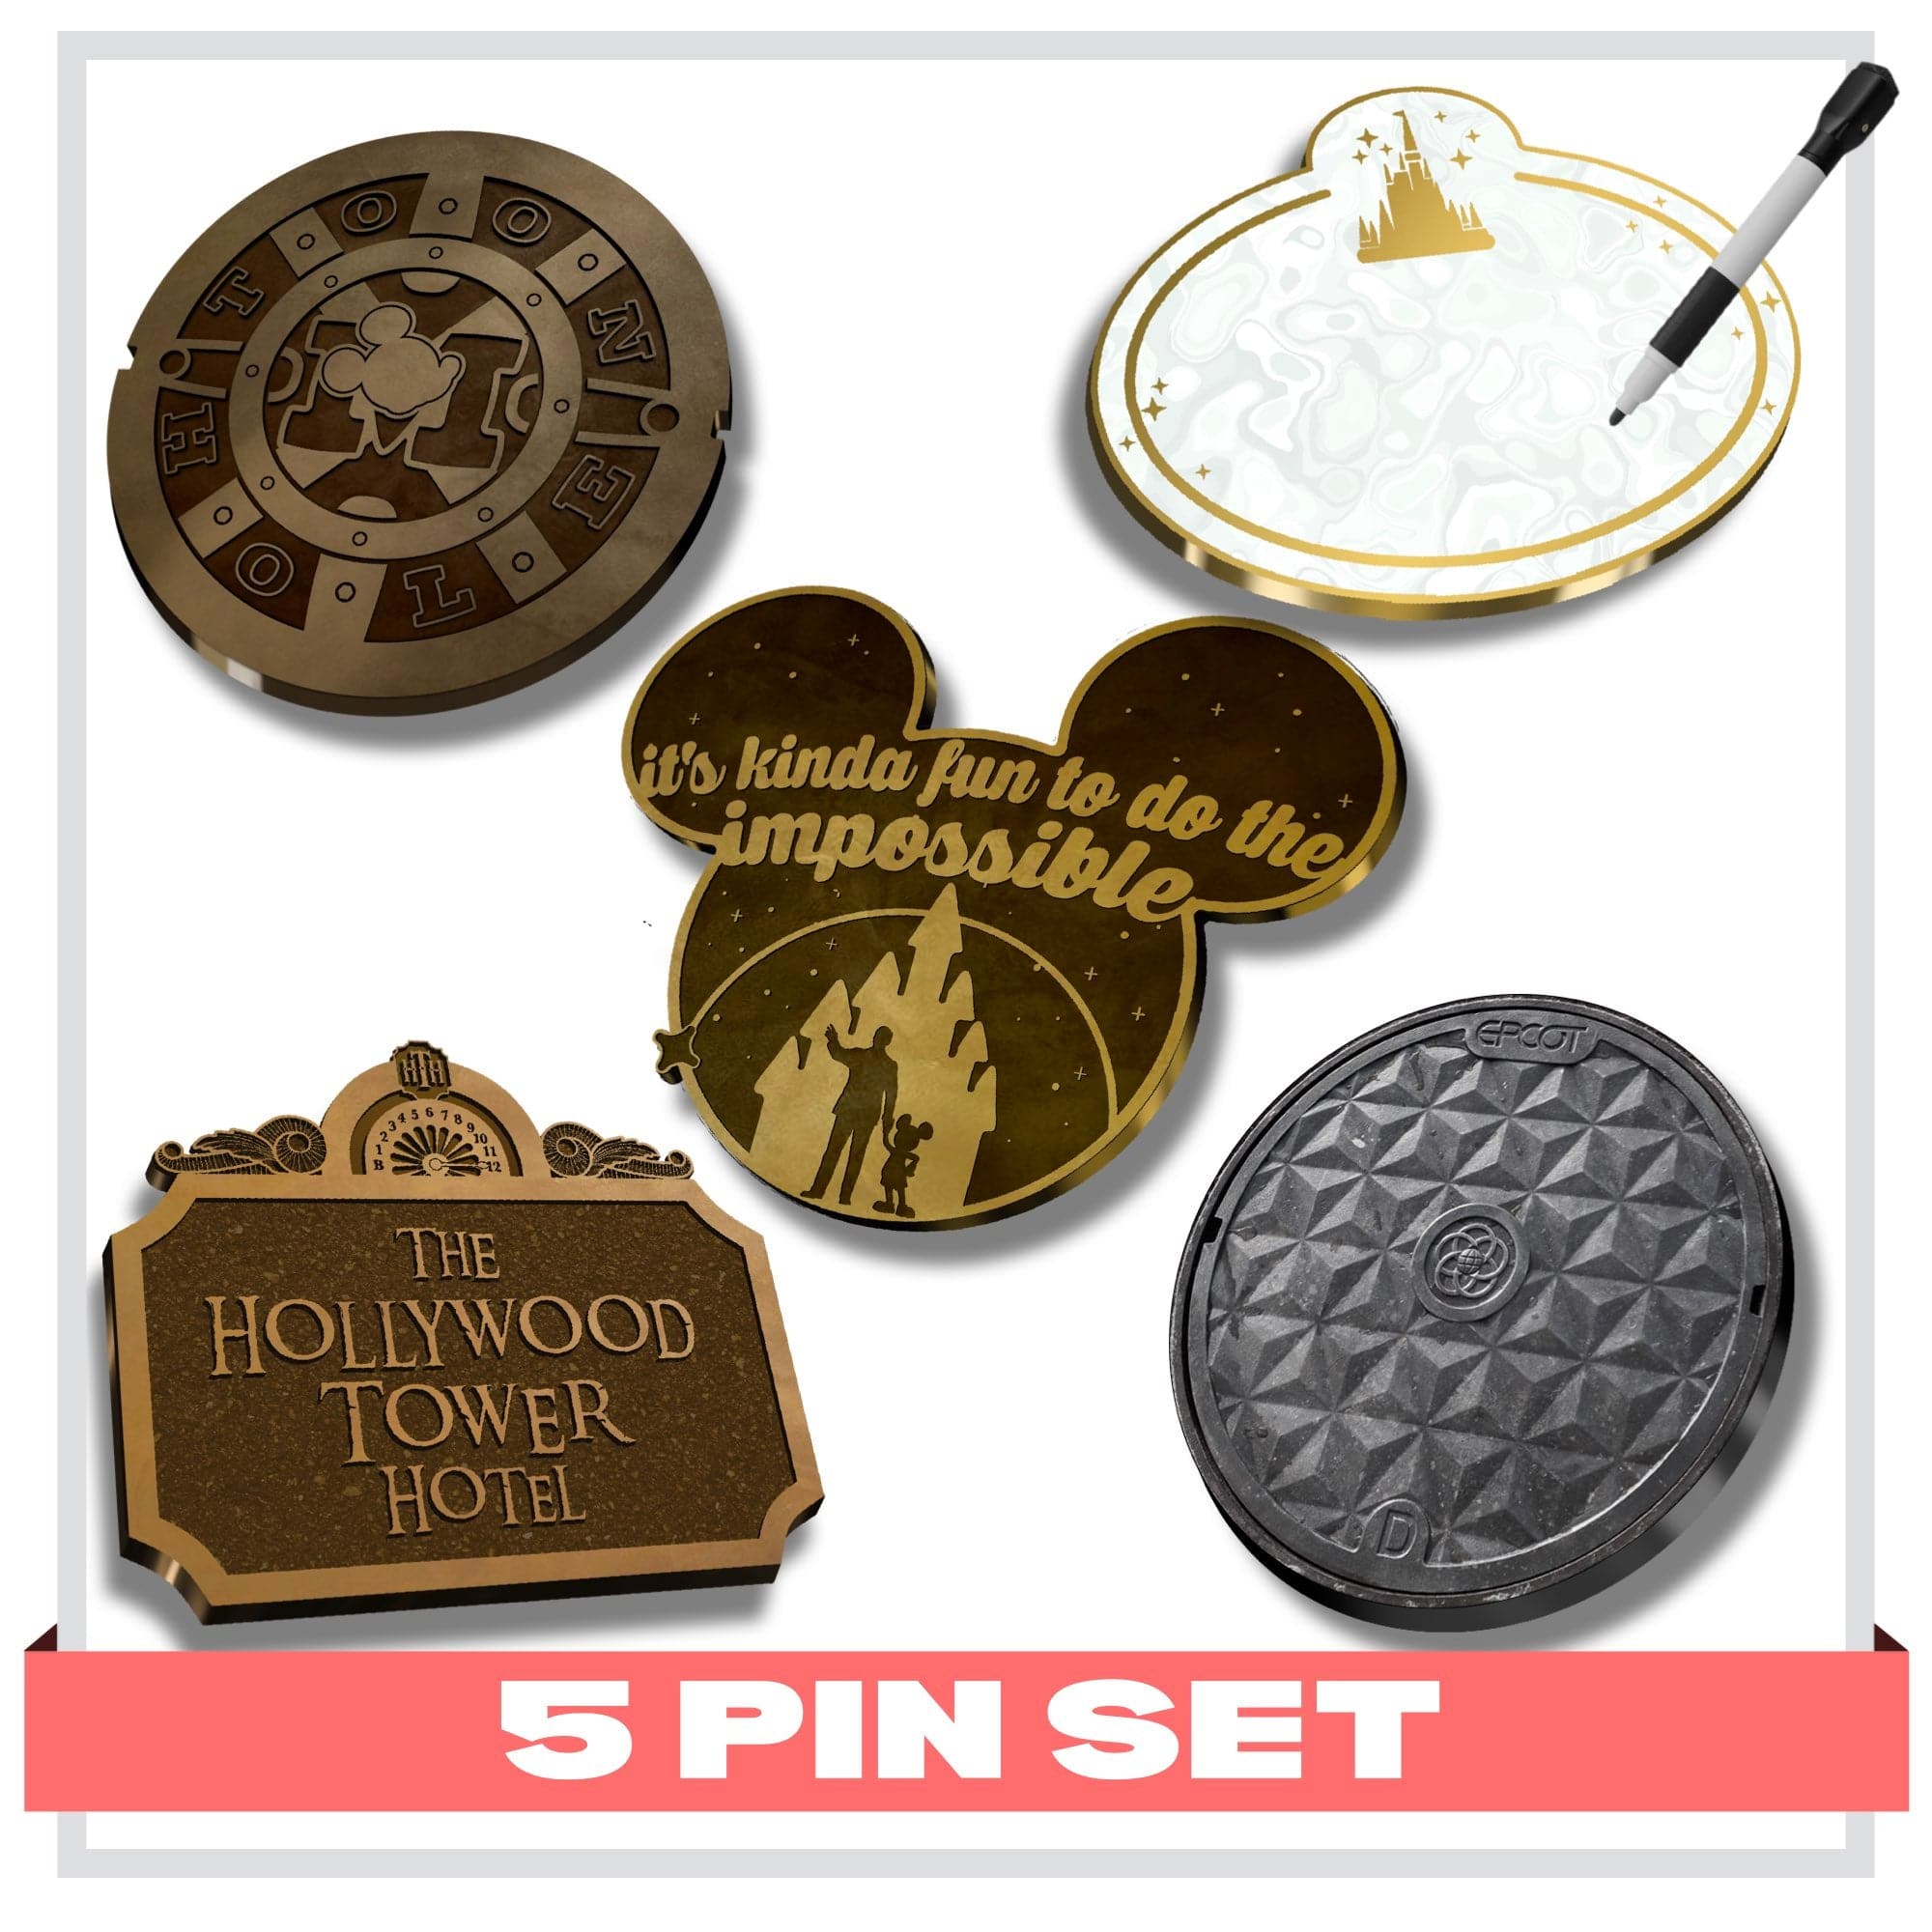 pinbuds Fantasy Park 5 Pin set Toontown Manhole pin